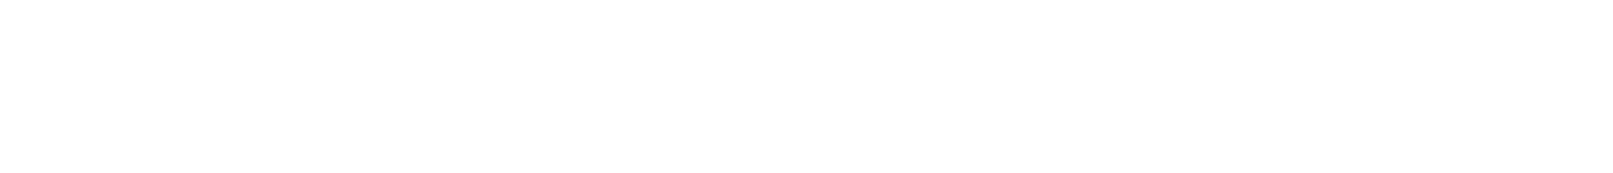 Atlas Technical Consultants Logo groß für dunkle Hintergründe (transparentes PNG)